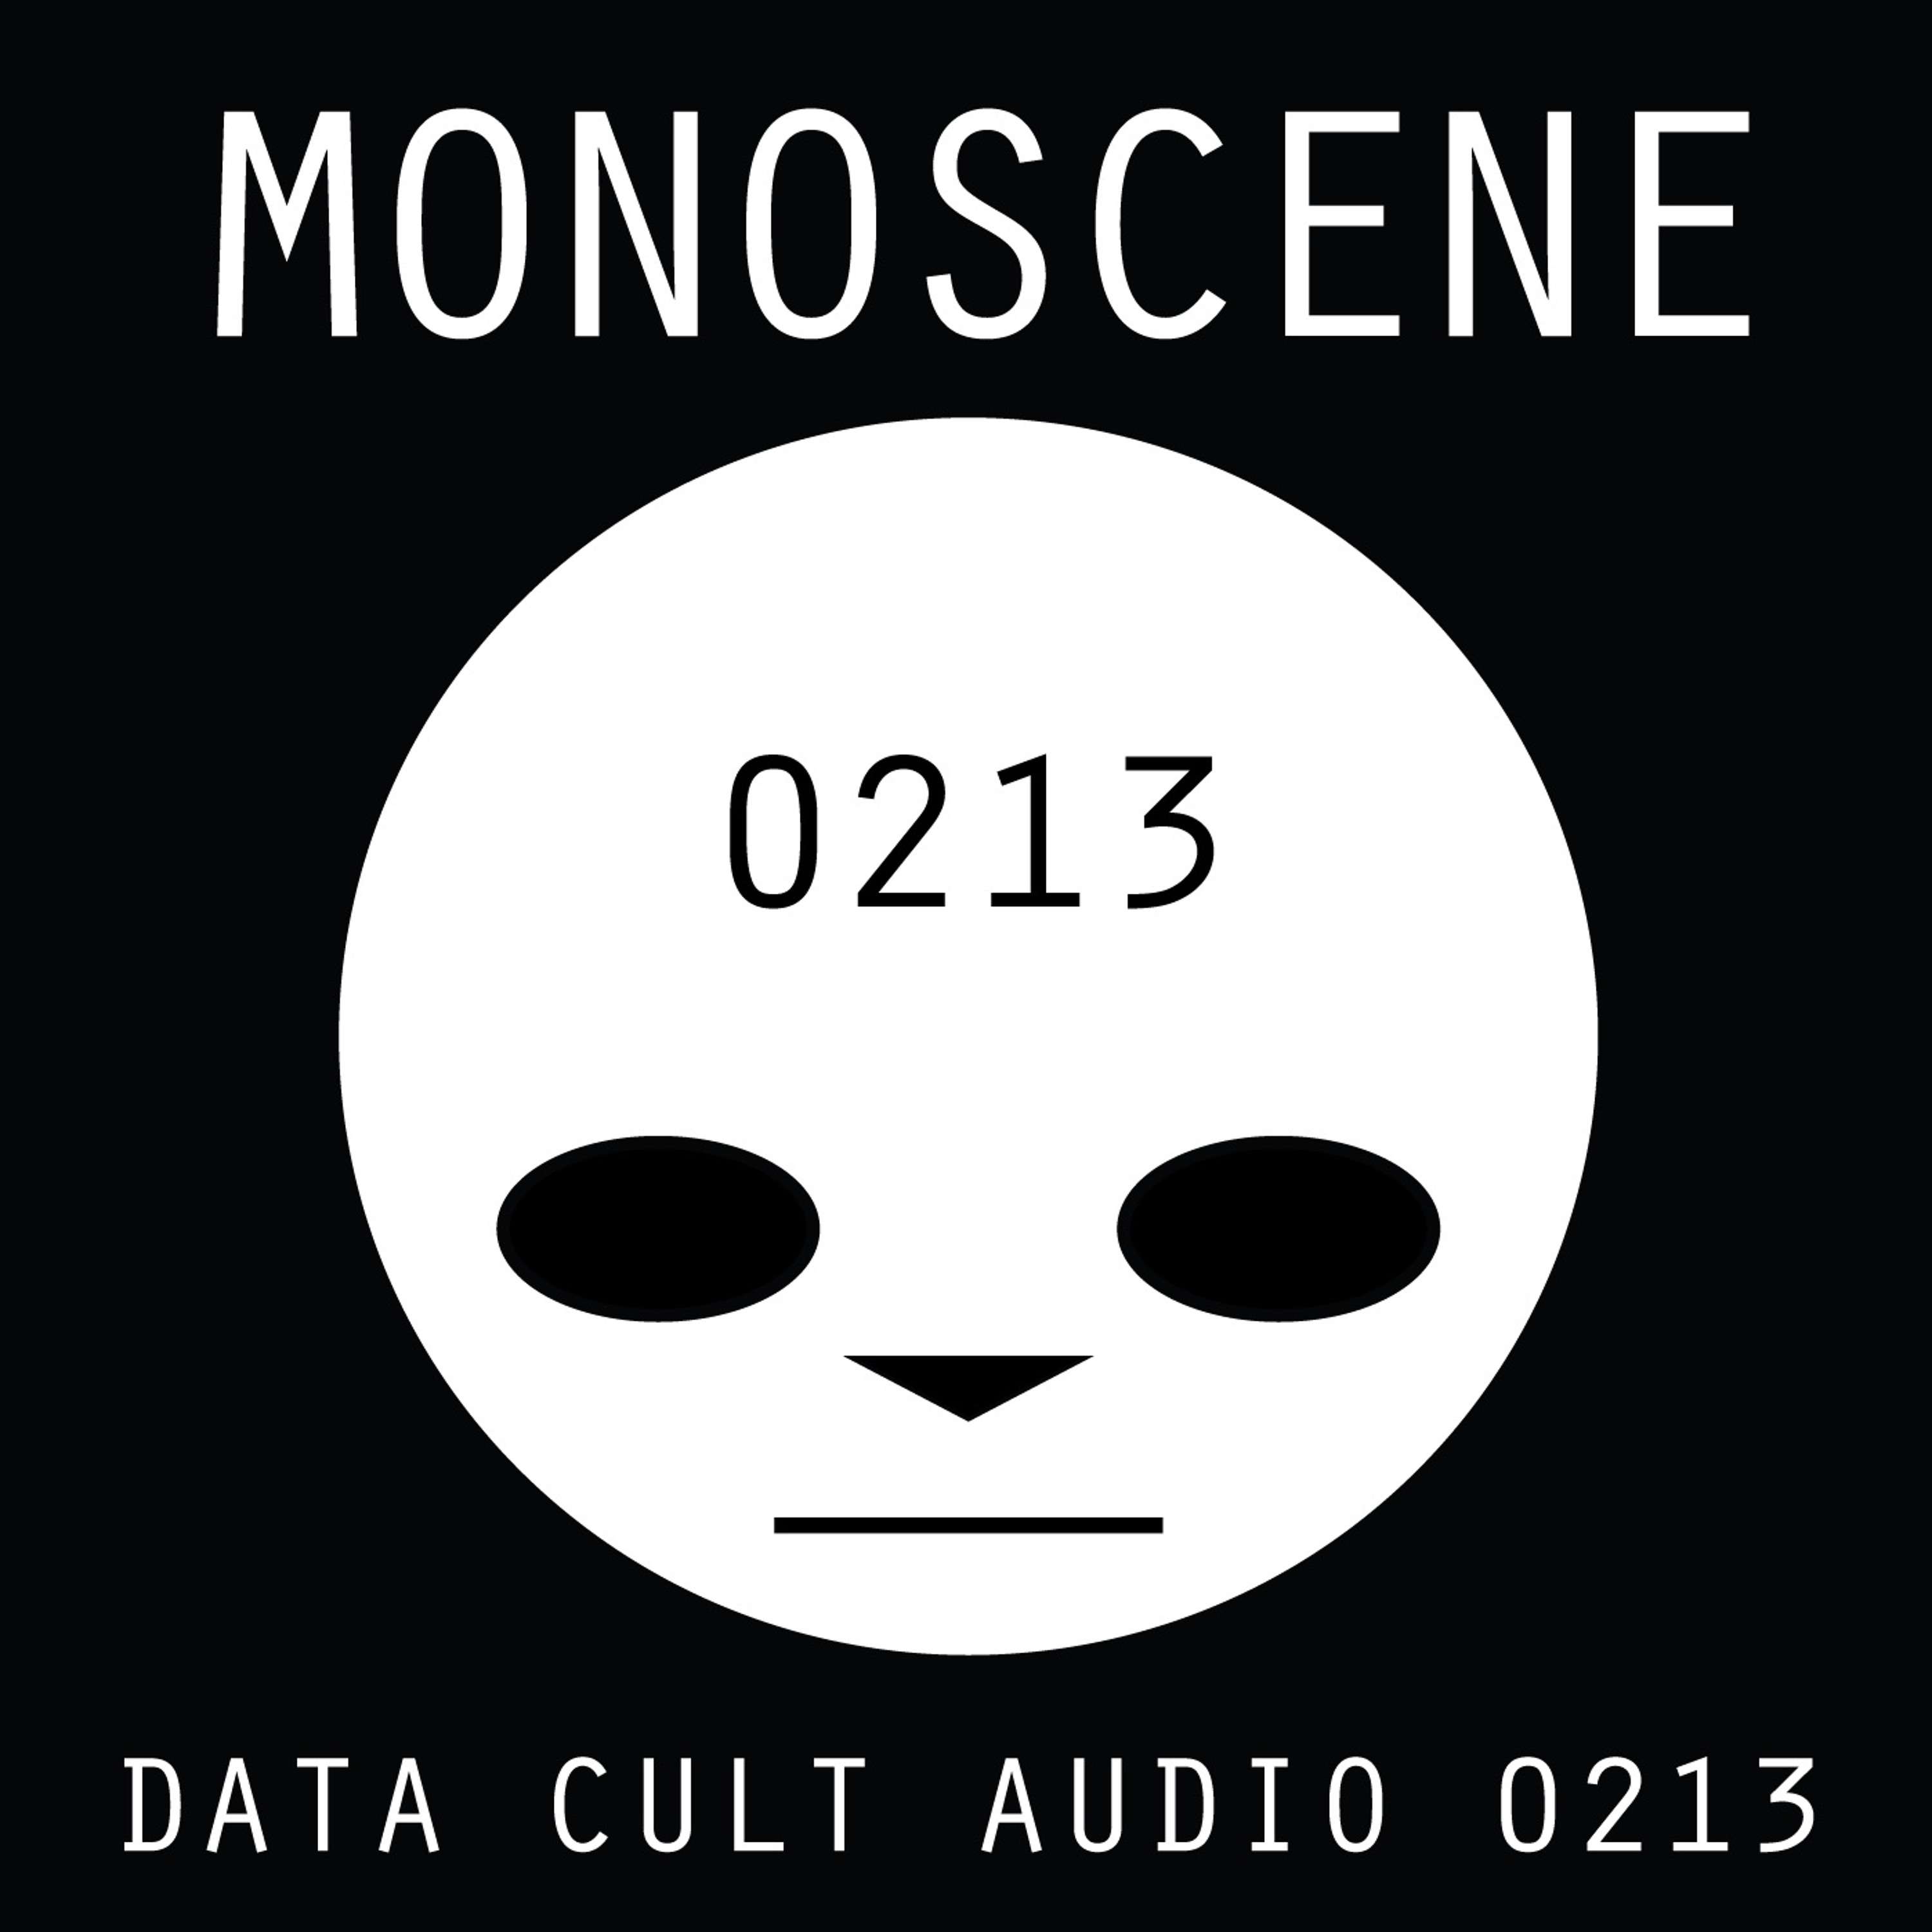 Data Cult Audio 0213 - Monoscene